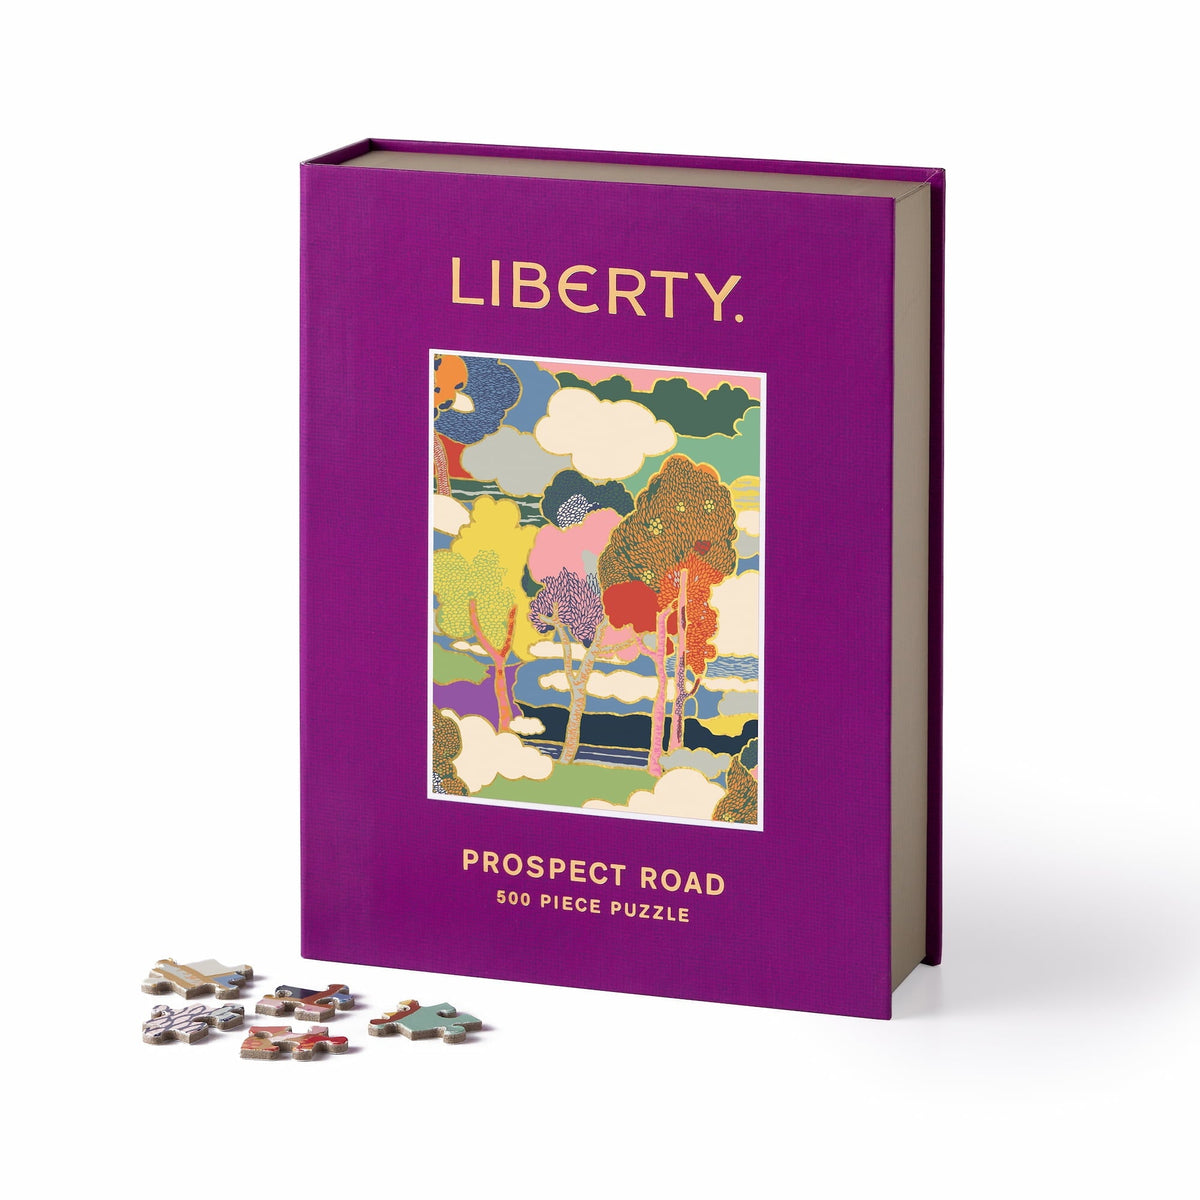 Liberty "Prospect Road" 500 Piece Book Puzzle